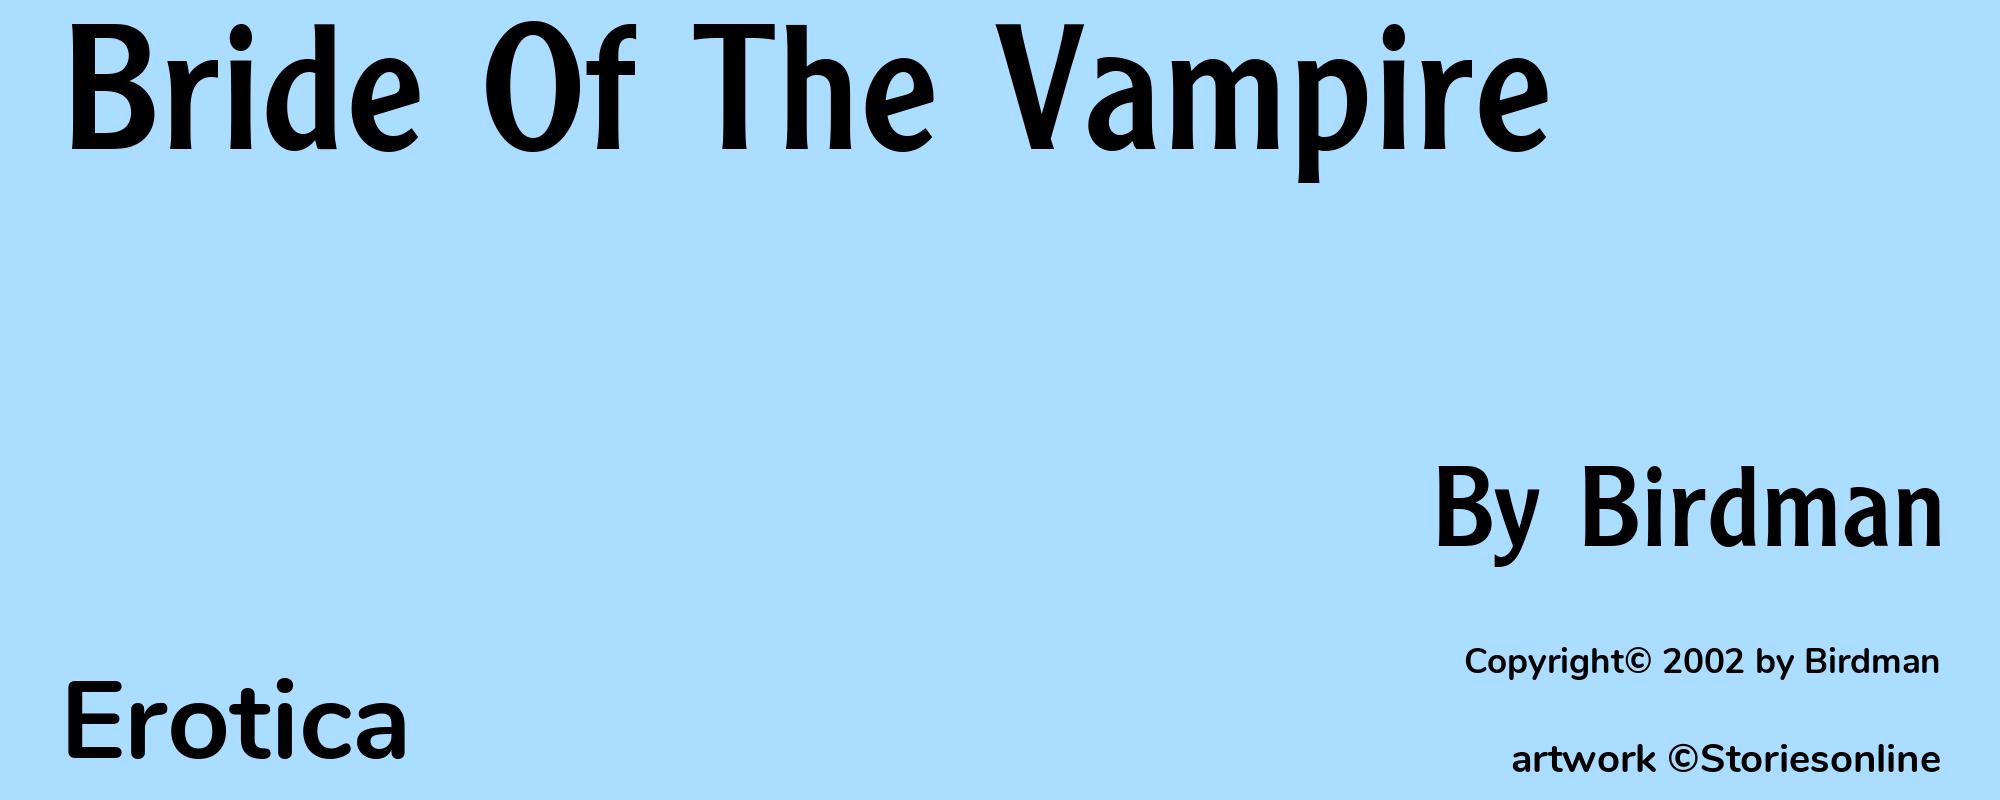 Bride Of The Vampire - Cover